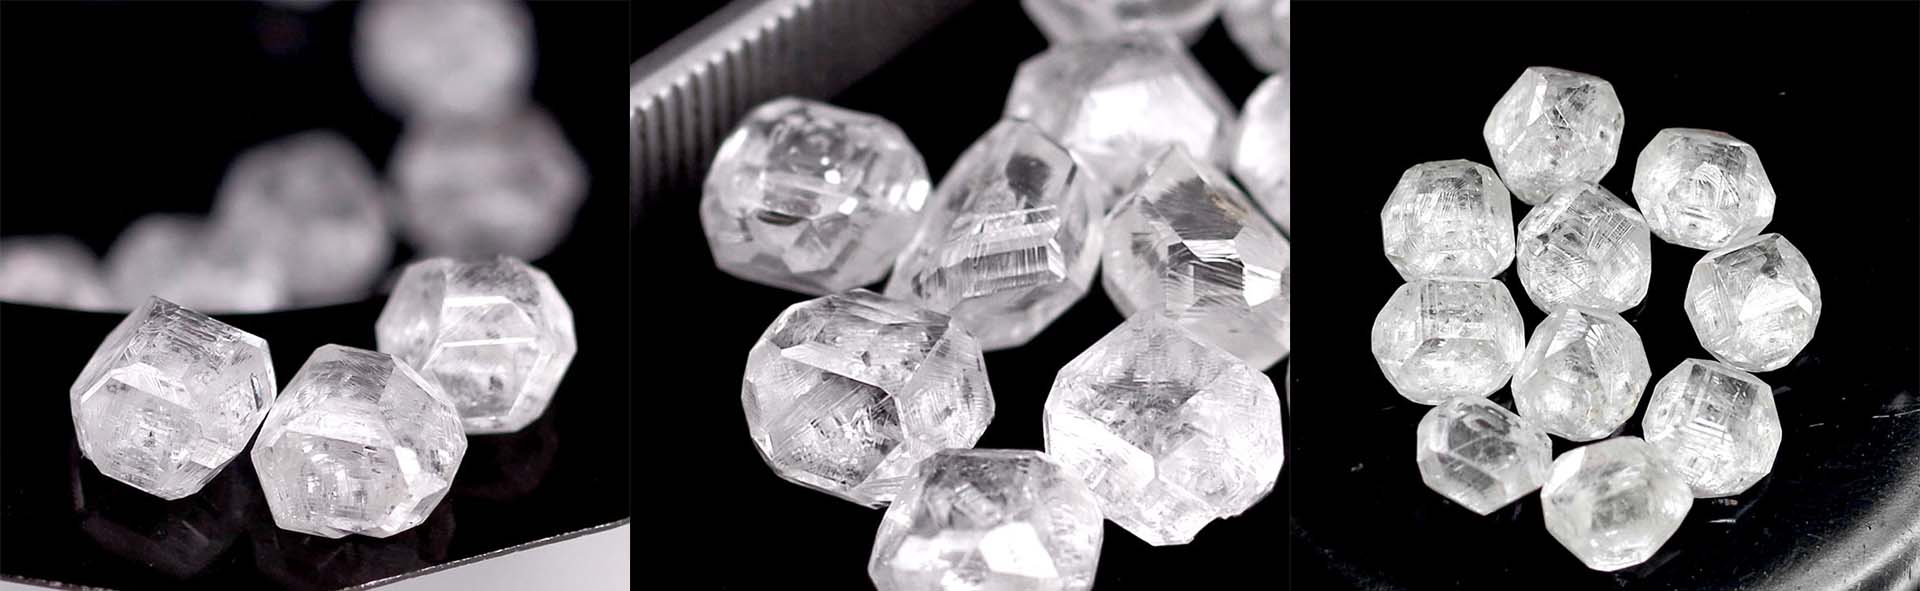 uncut rough white diamond price per carat hpht big size synthetic rough diamond 4